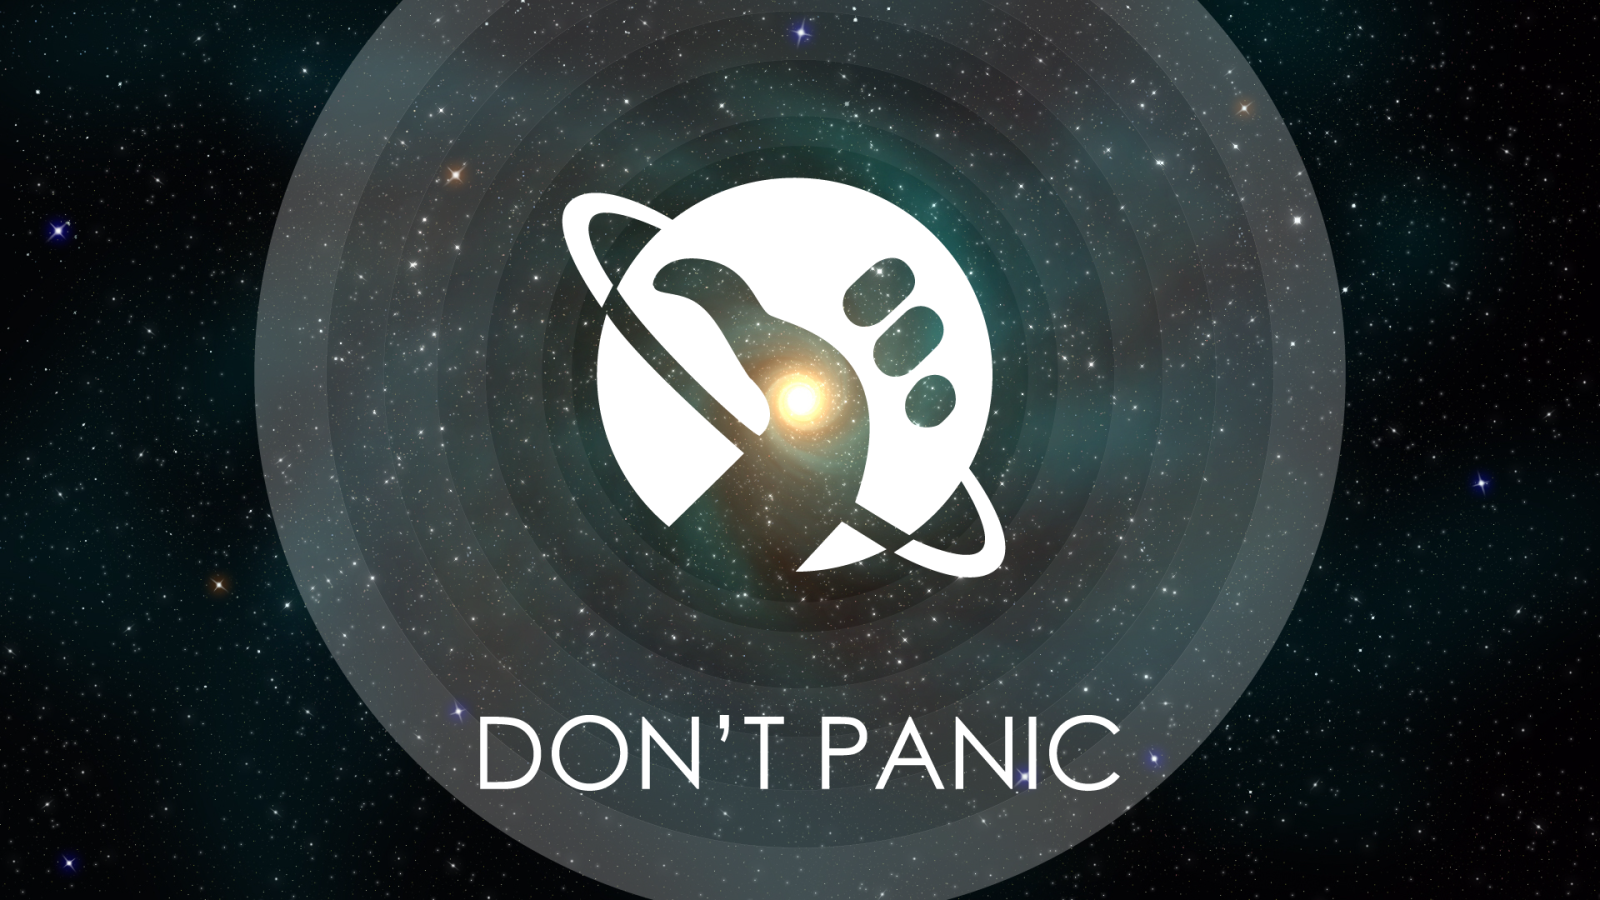 Do not panic